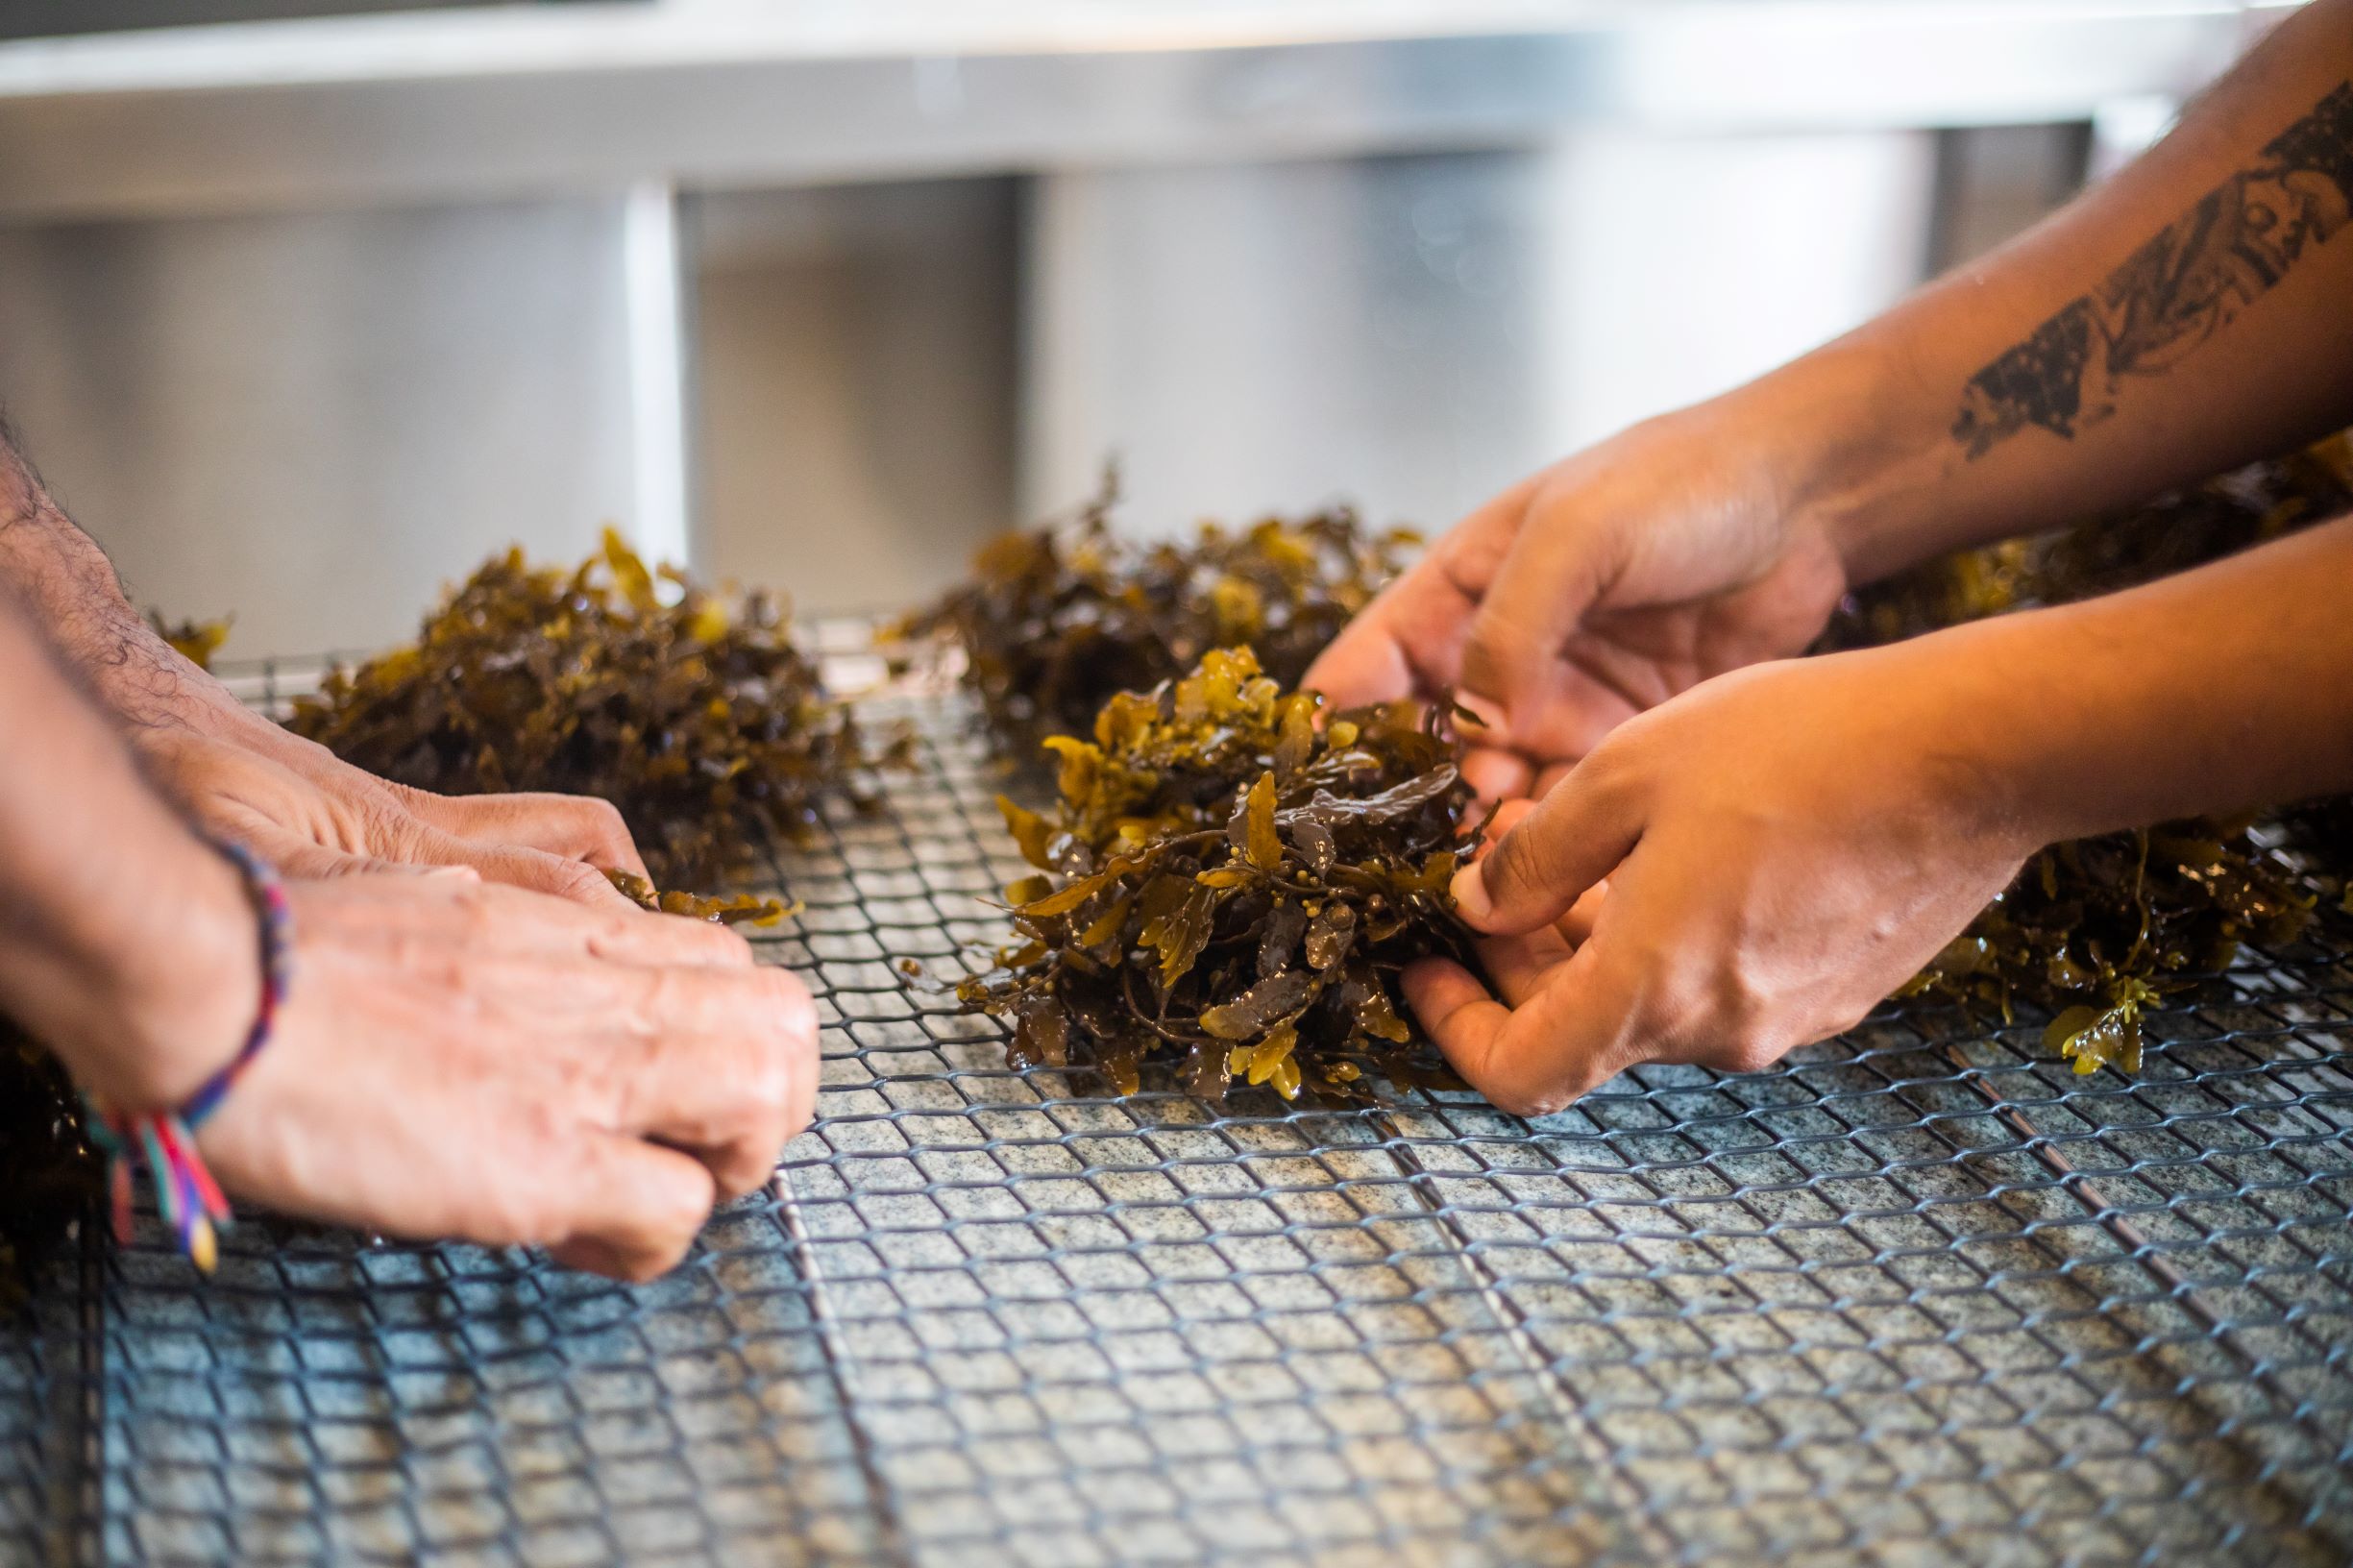 Gabriella Dcruz (The Good Ocean) explains Seaweed Farming in India